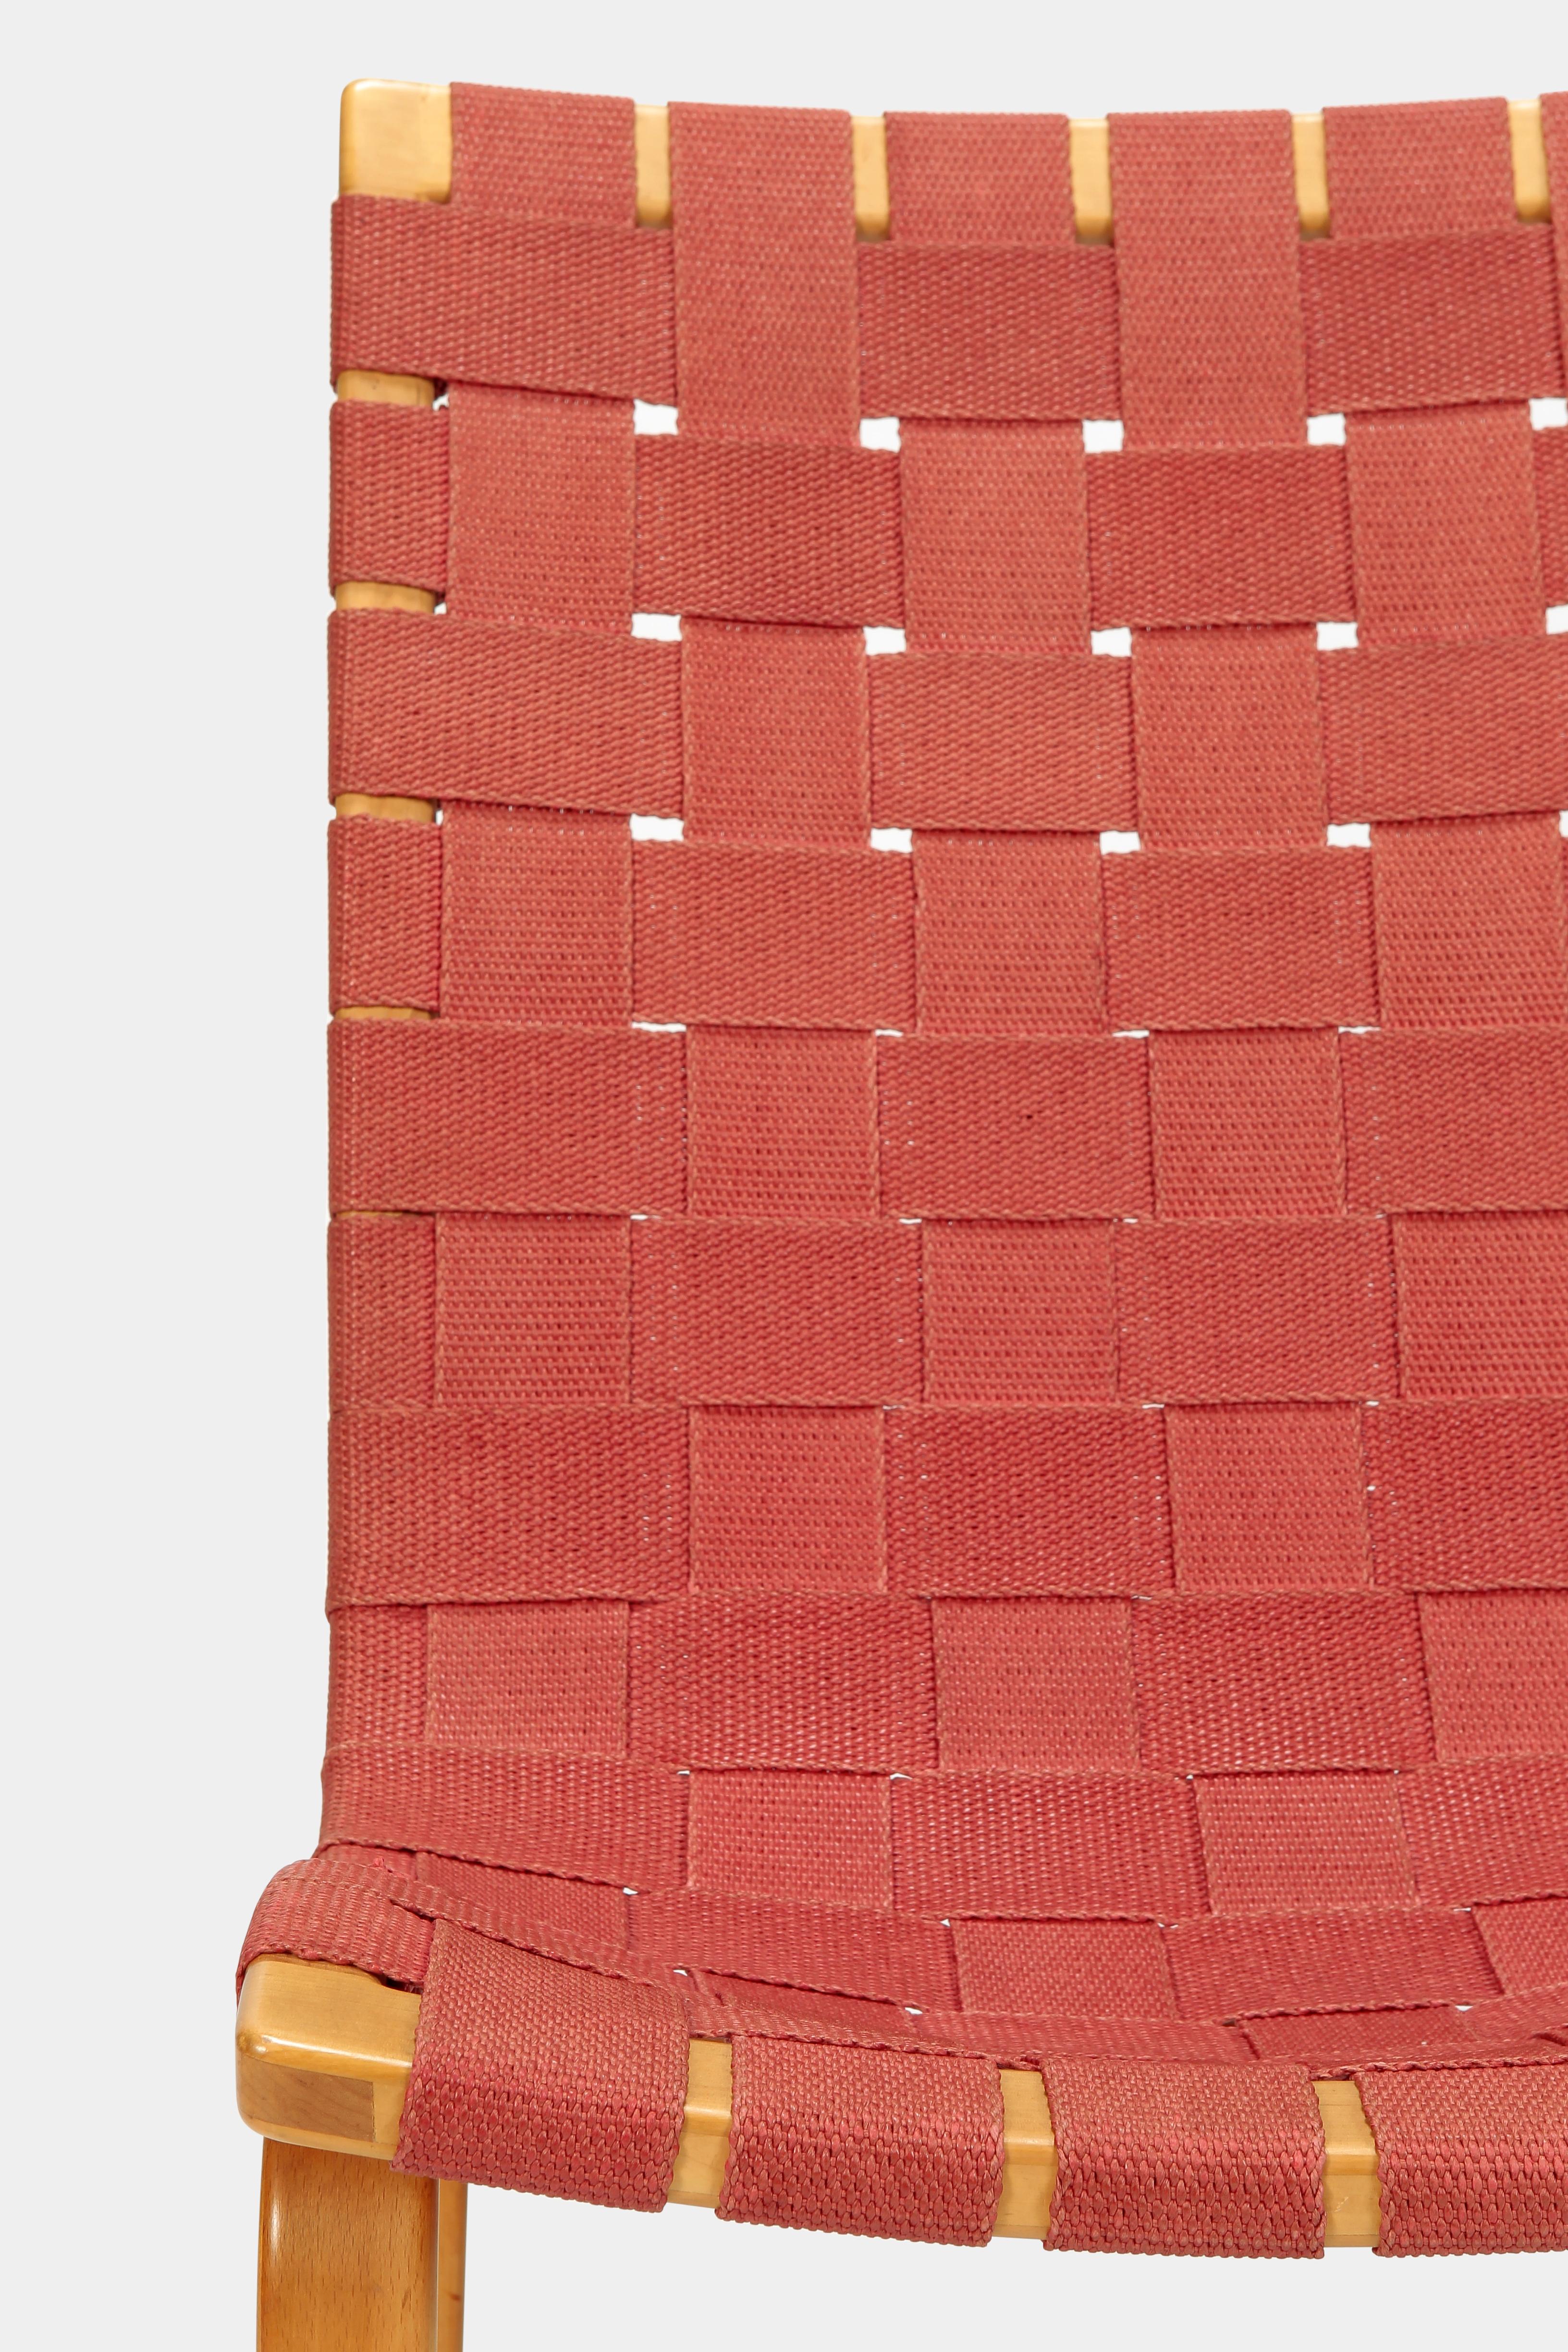 Mid-20th Century Bruno Mathsson ‘Eva’ Chair 1941 For Sale